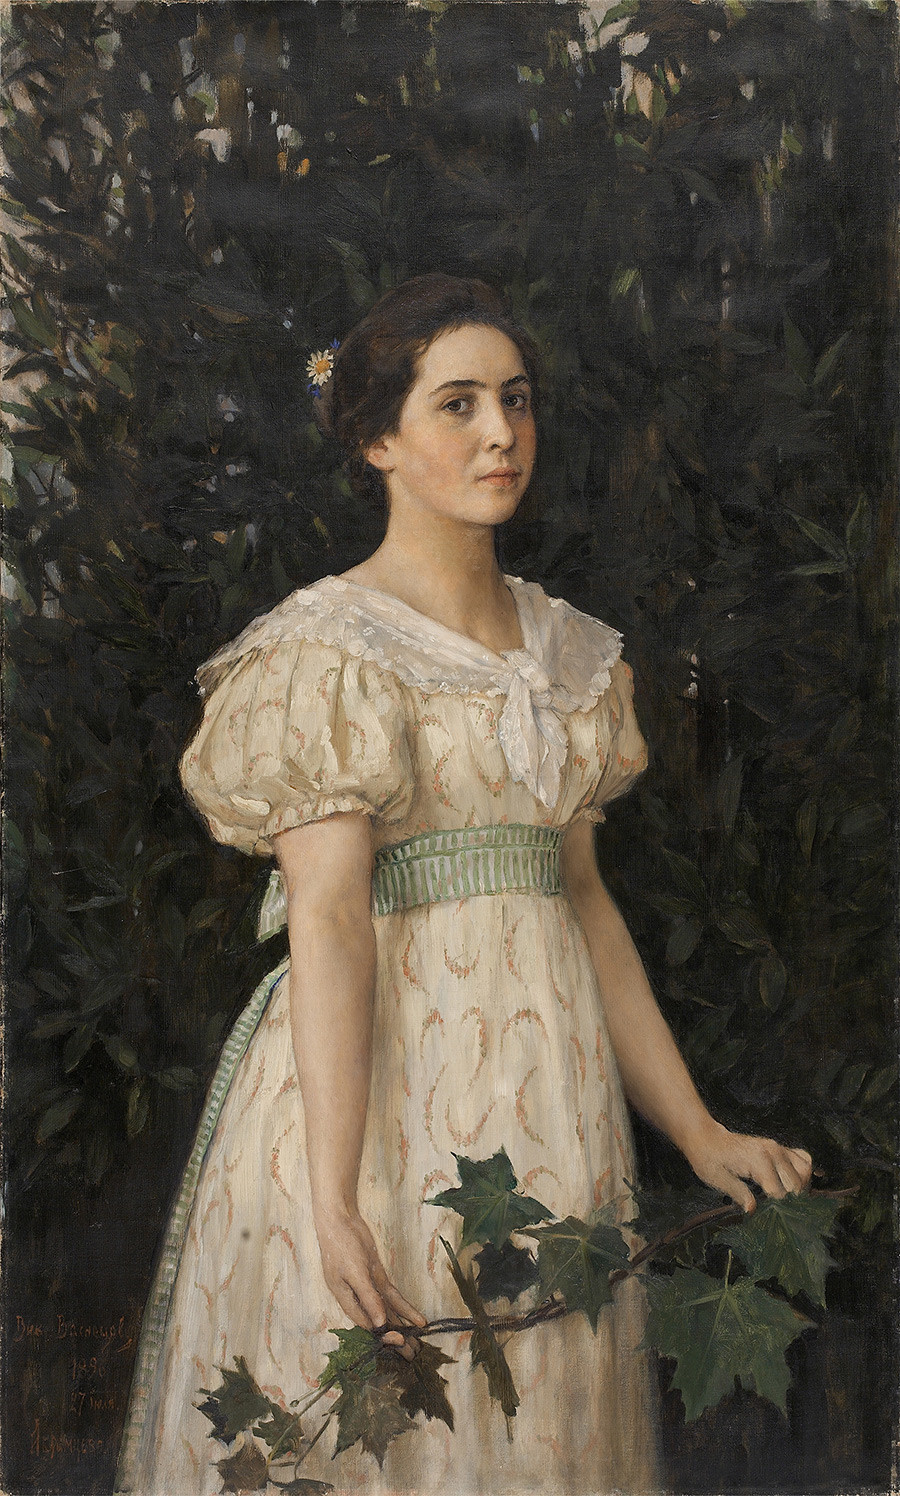 “Garota com um ramo de bordo” (1886), retrato de Vera Mámontova pintado por Víktor Vasnetsov.